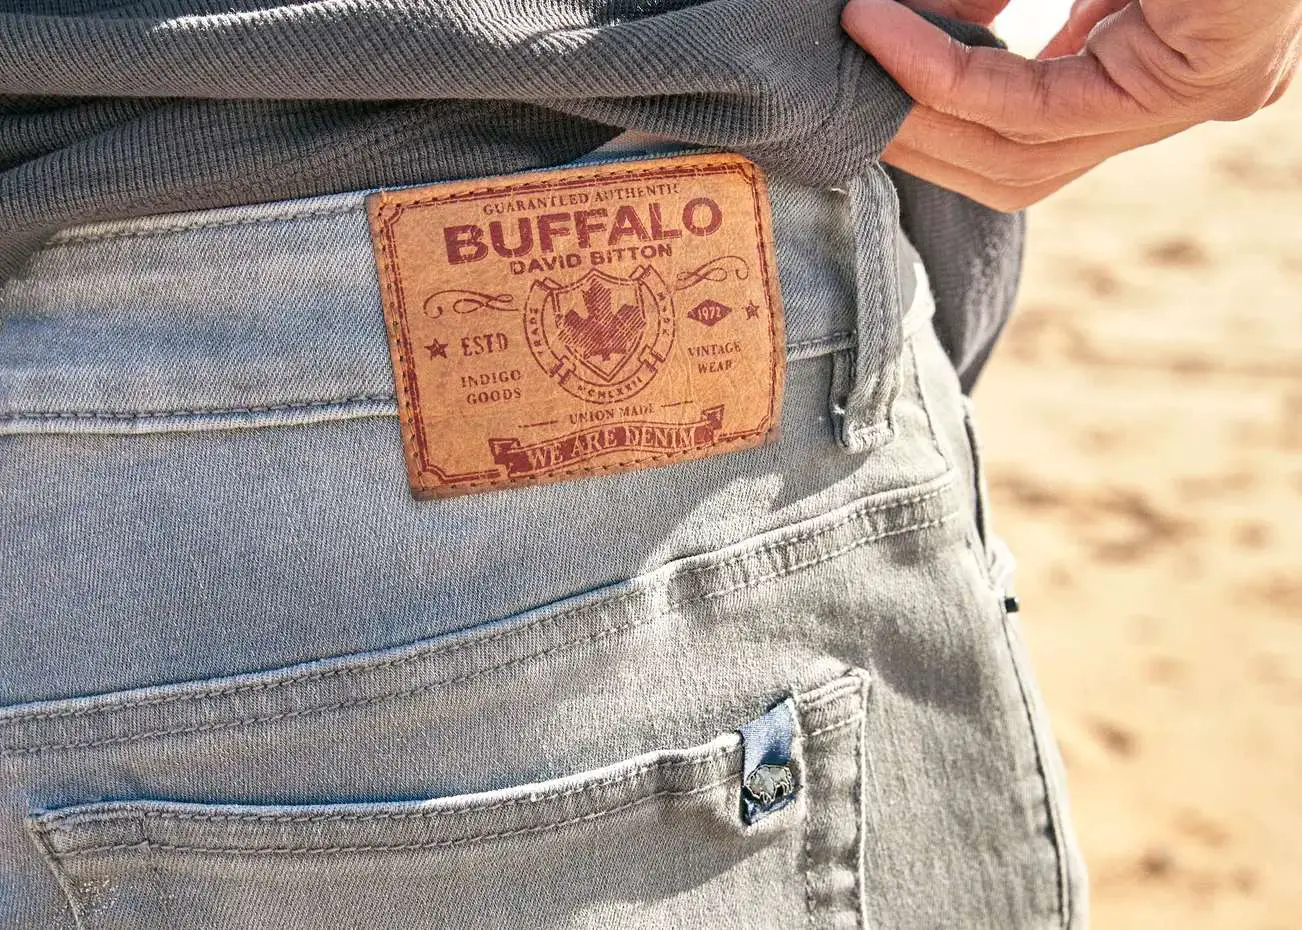 A Brief History of Buffalo Jeans